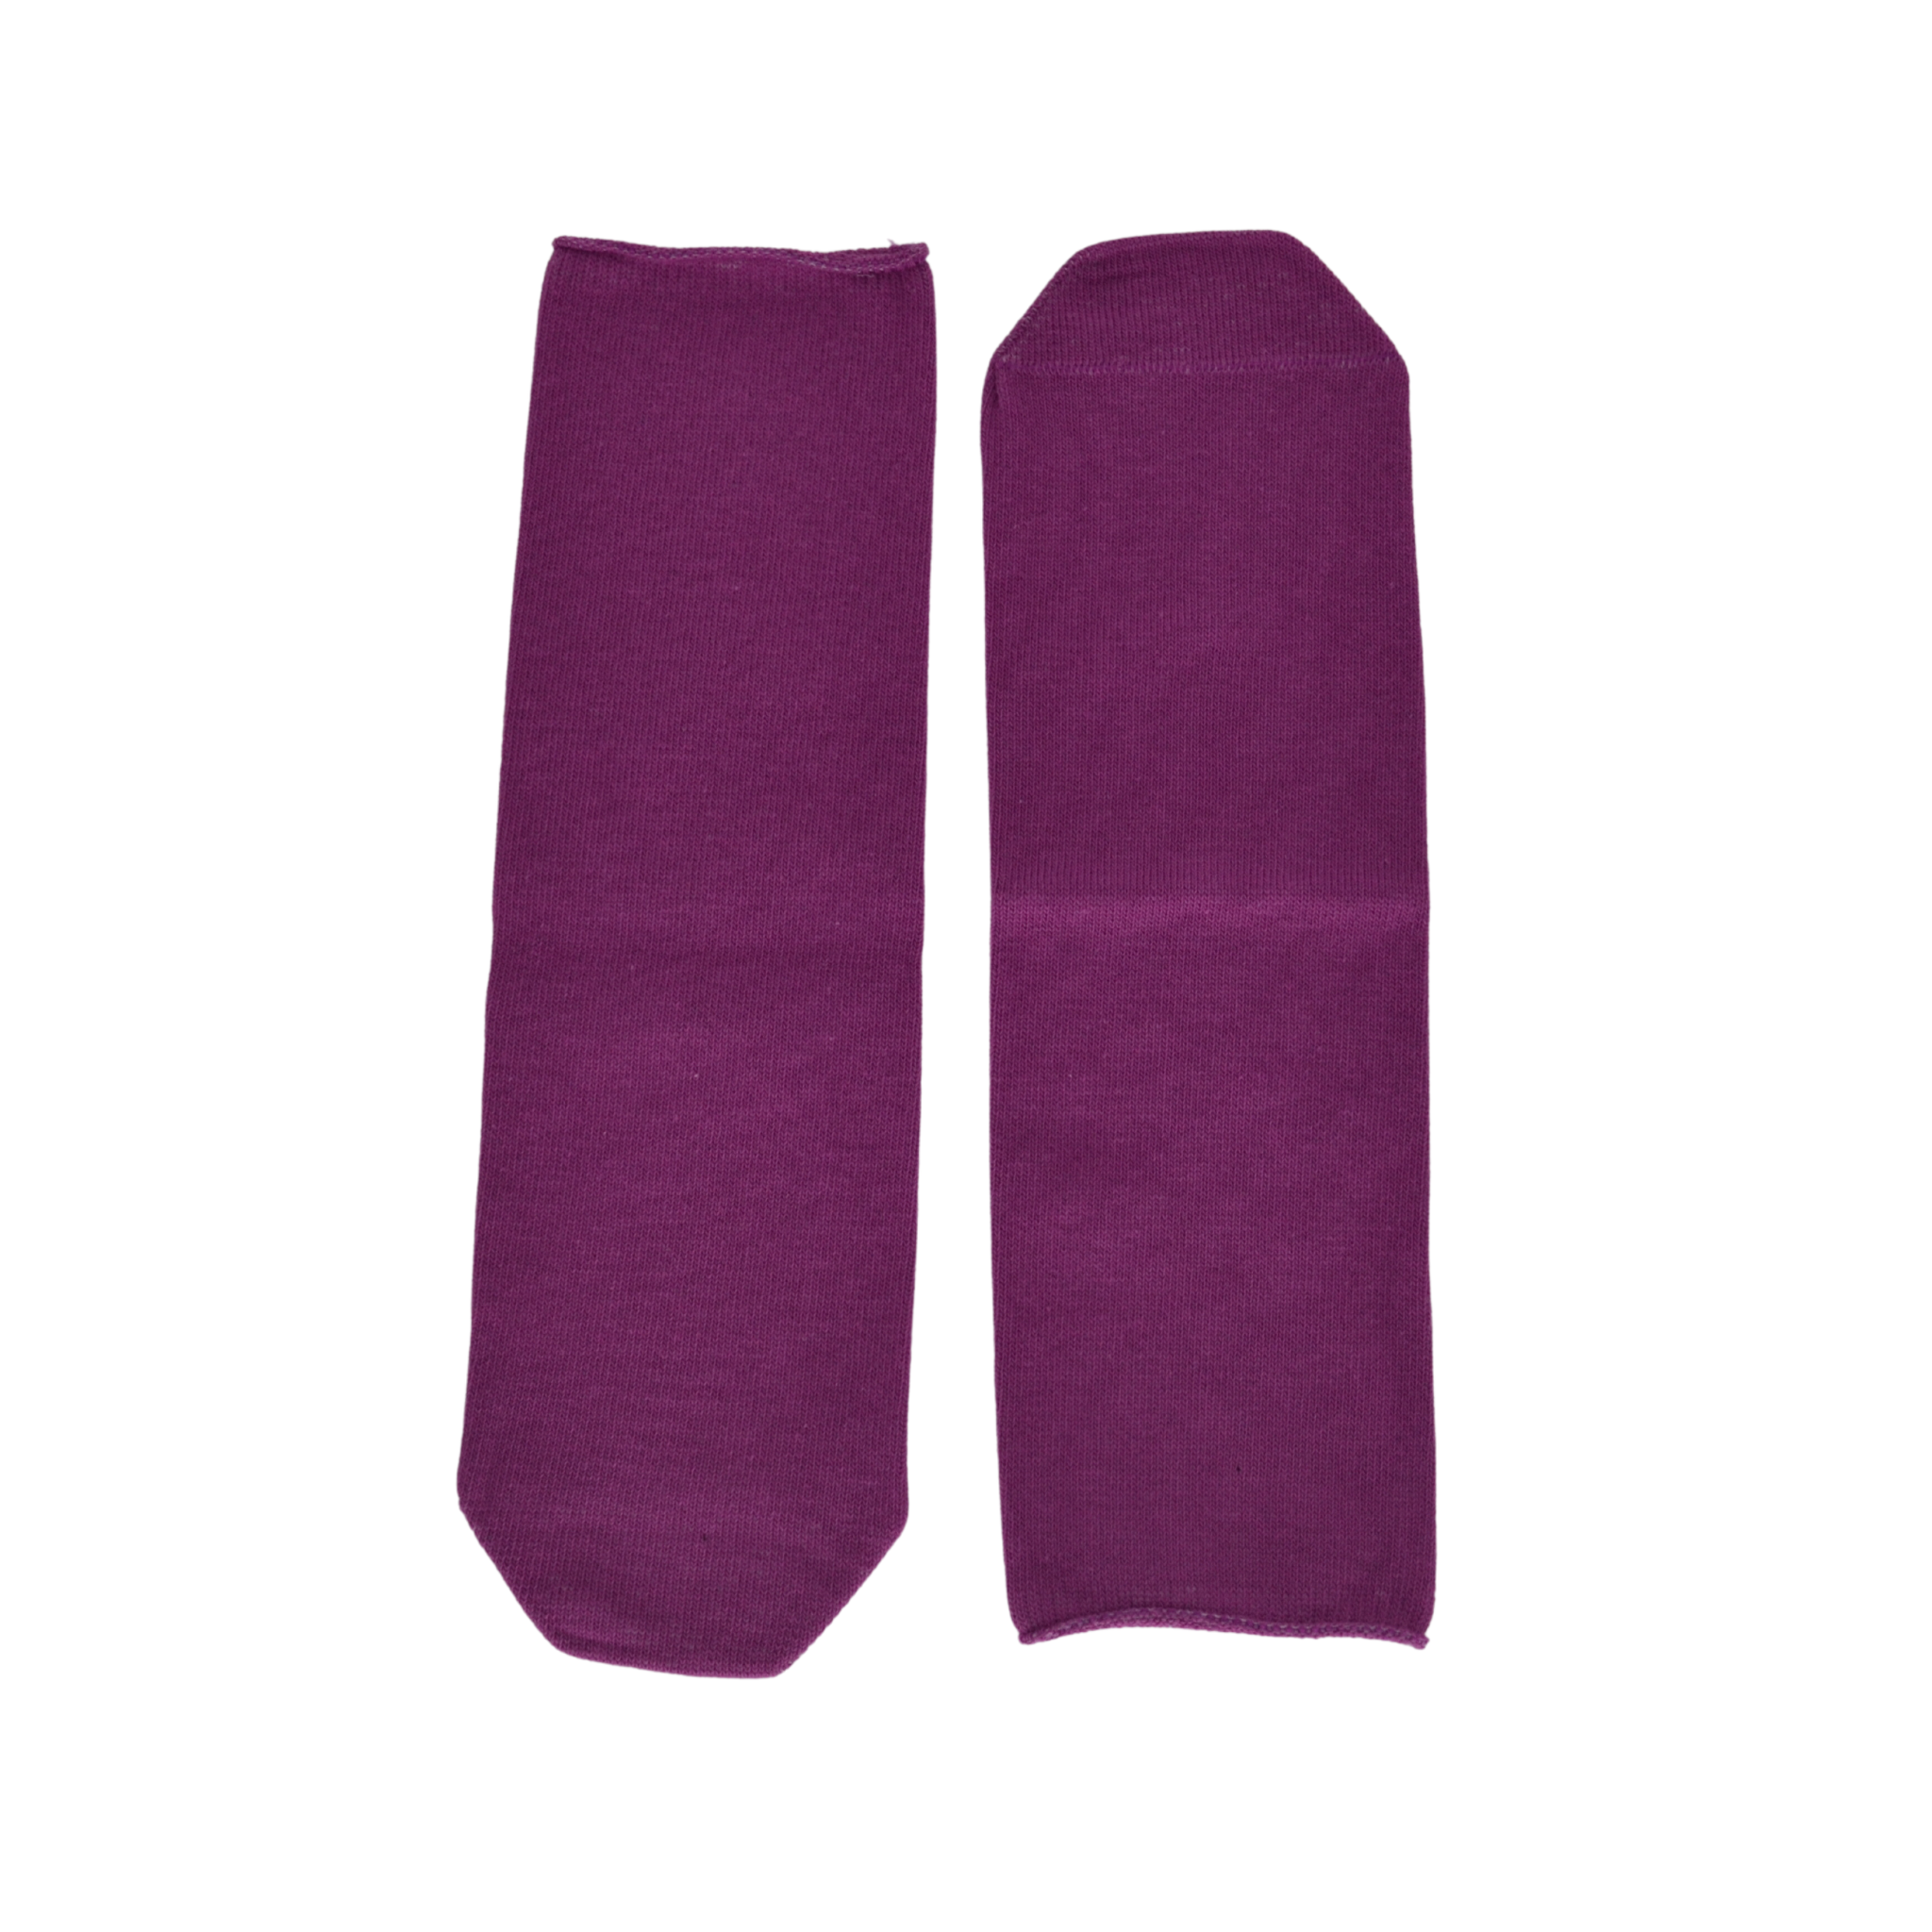 Sensory Clothing - Seamless Socks for Adults